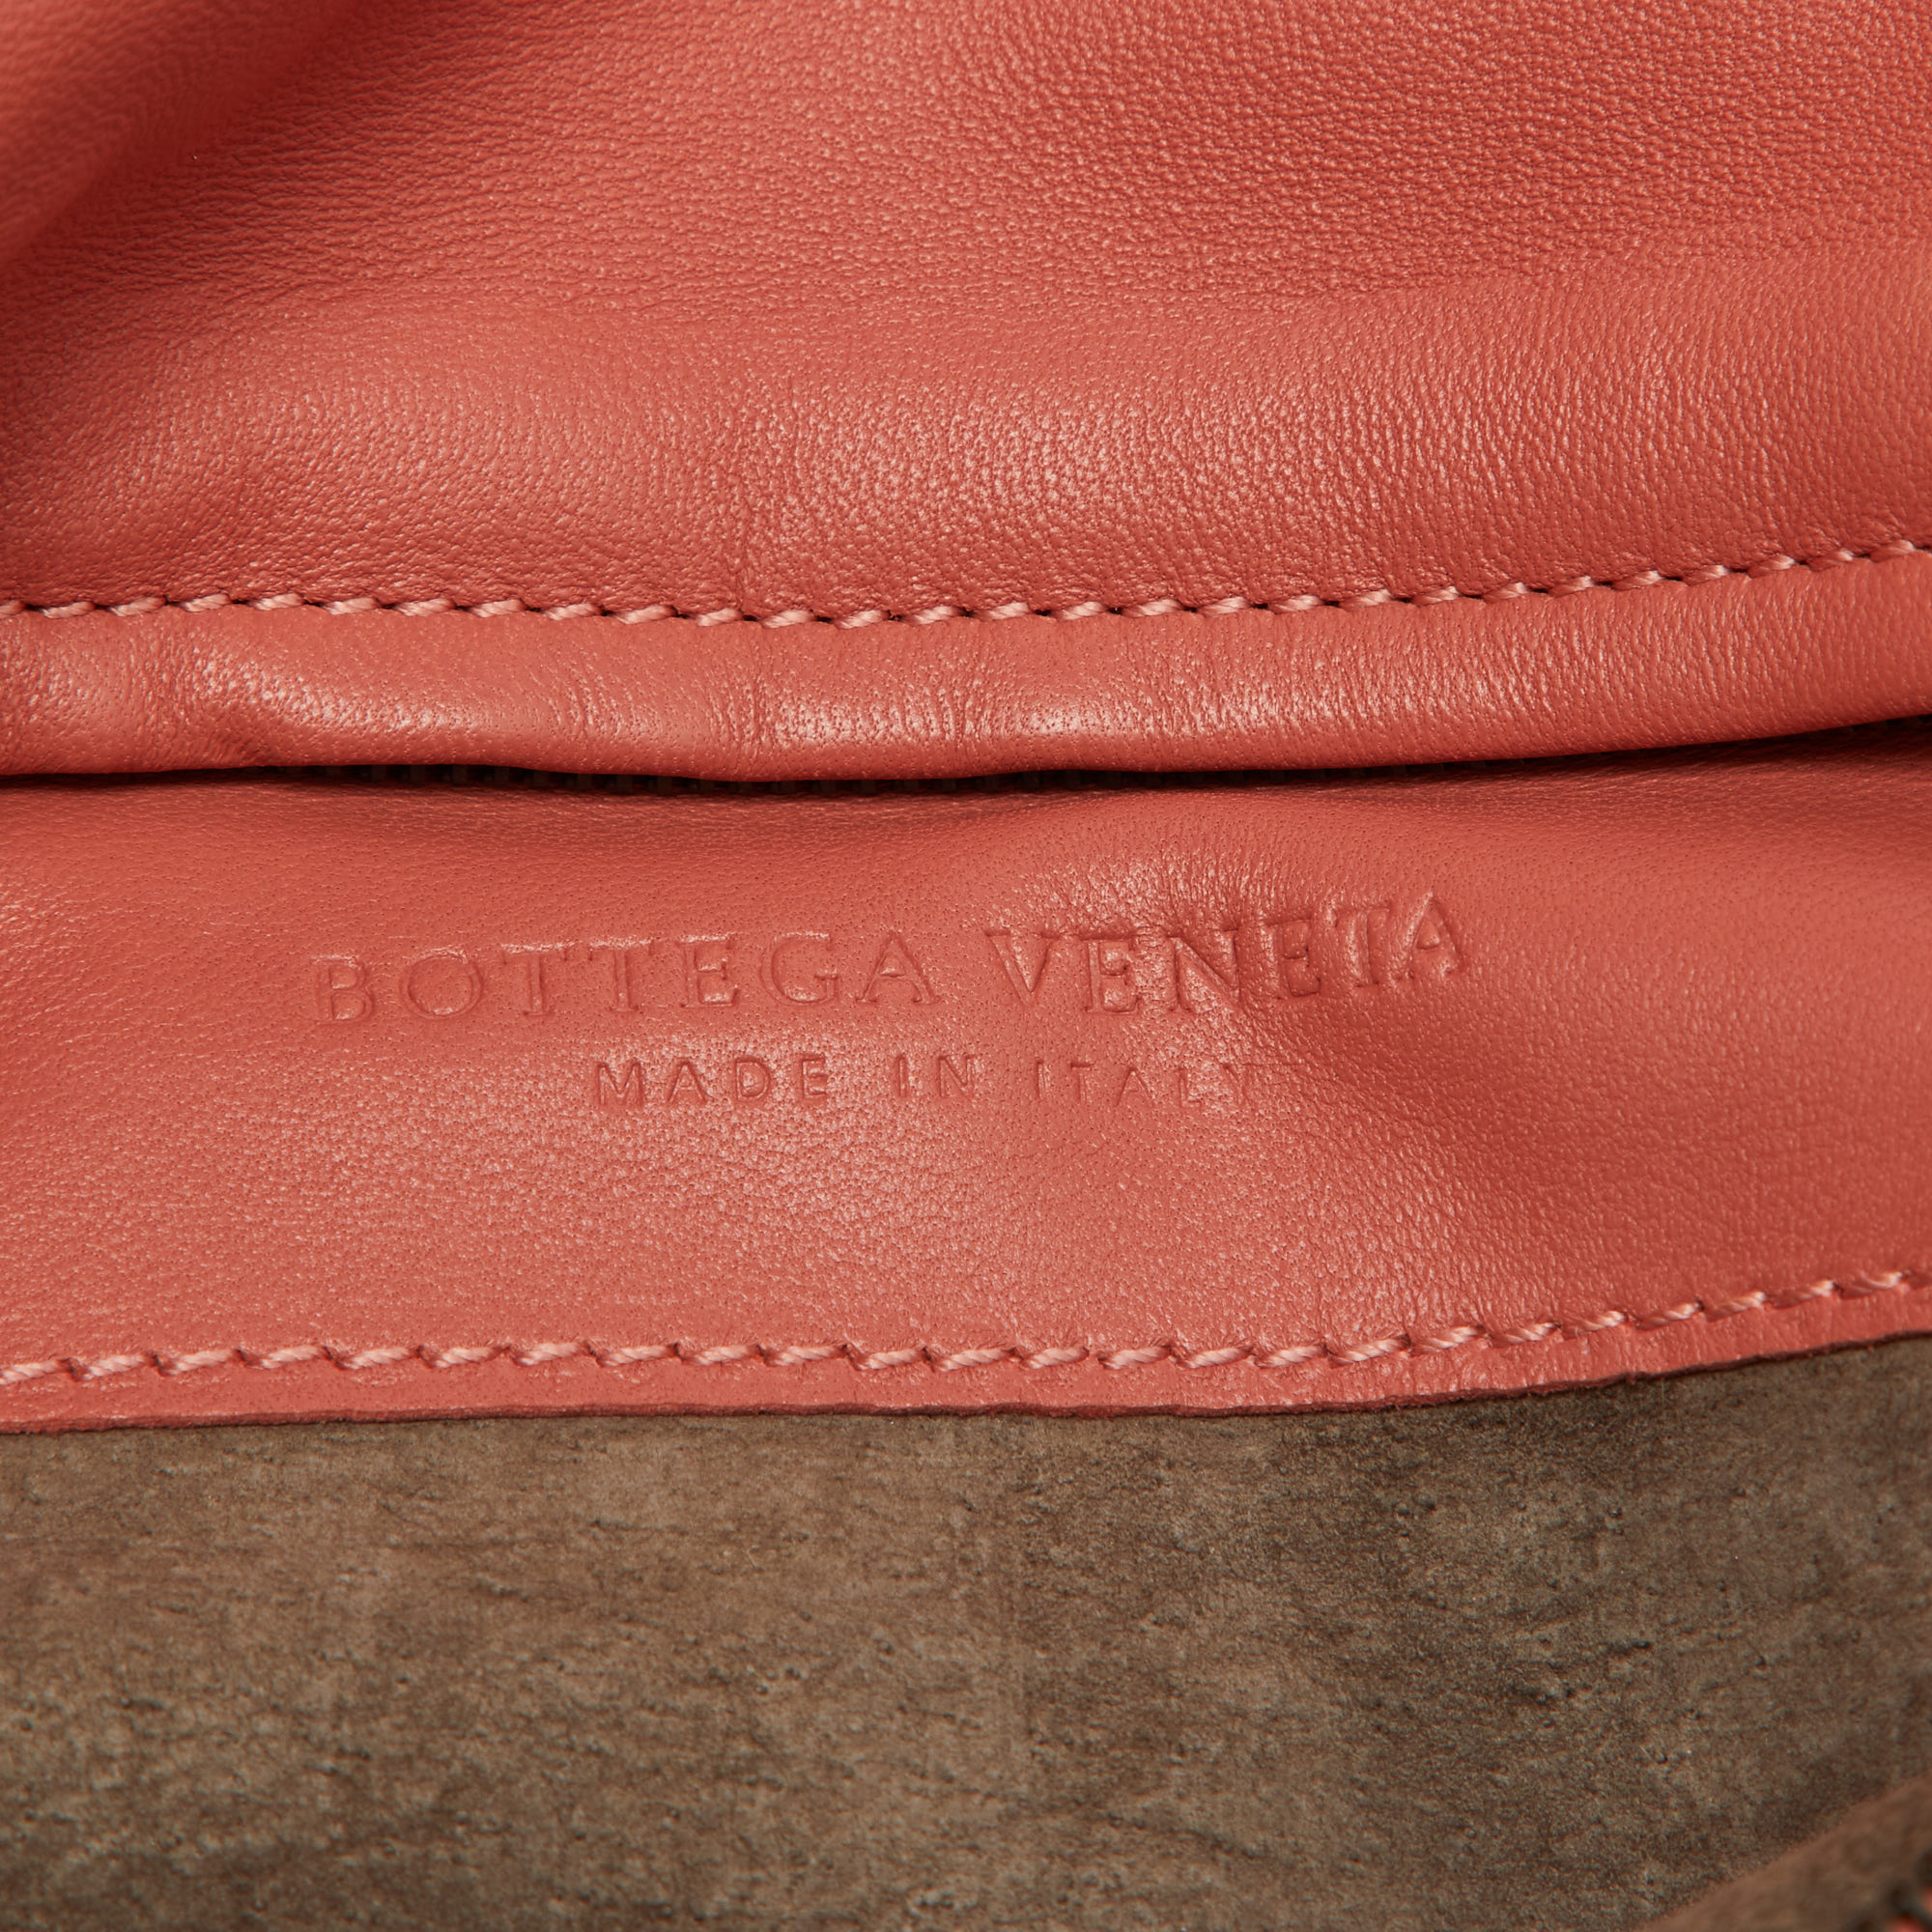 Bottega Veneta Intrecciato Leather Turnlock Clutch